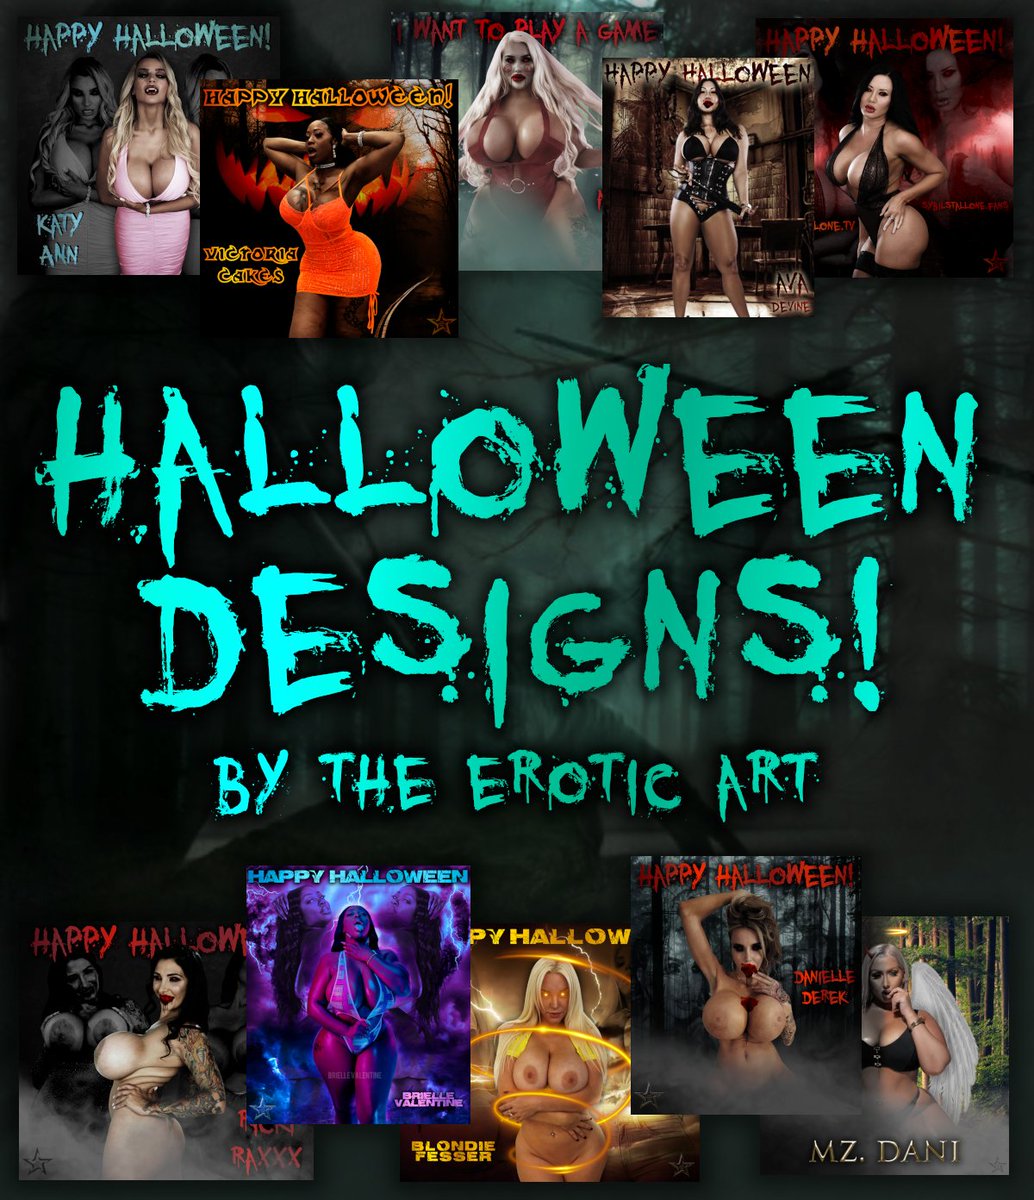 Get your own original Halloween Design! 🎃✨ Contact: DM or e-mail (theeroticart@gmail.com) @vickycakesclub @mzdaniii @AmberDollxo @blondie_oficial @alleyezonbrie @Katy_Ann_XO @SybilStalloneTV @daniellederekxo @RealRickiRaxxx @1avadevine Retweets appreciated 🙏